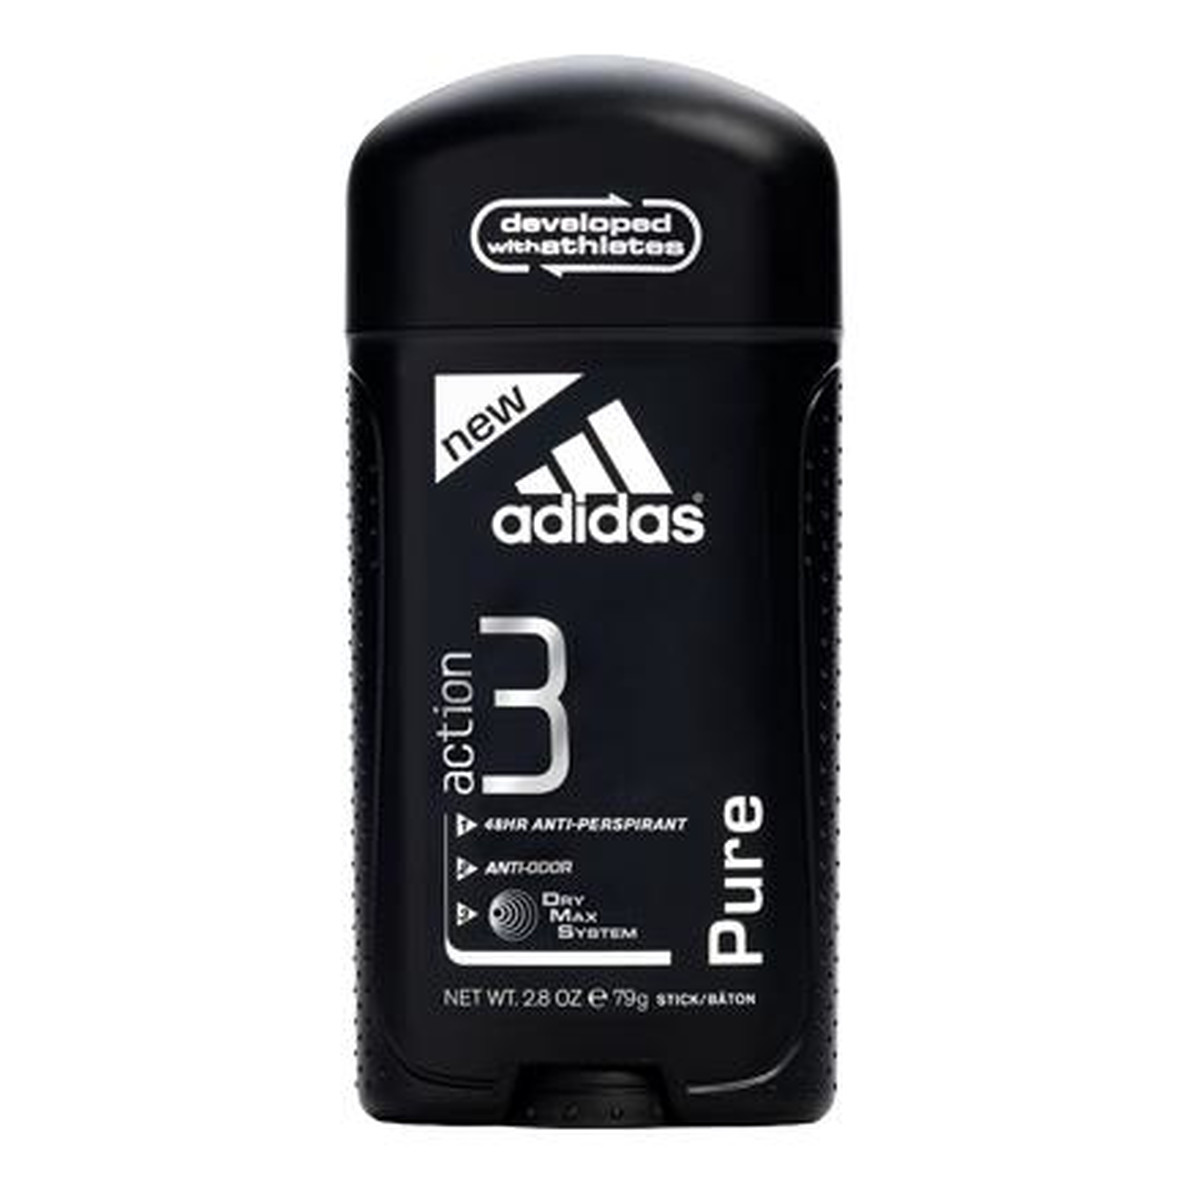 Adidas Action 3 Men Pure Dezodorant Sztyft 50ml